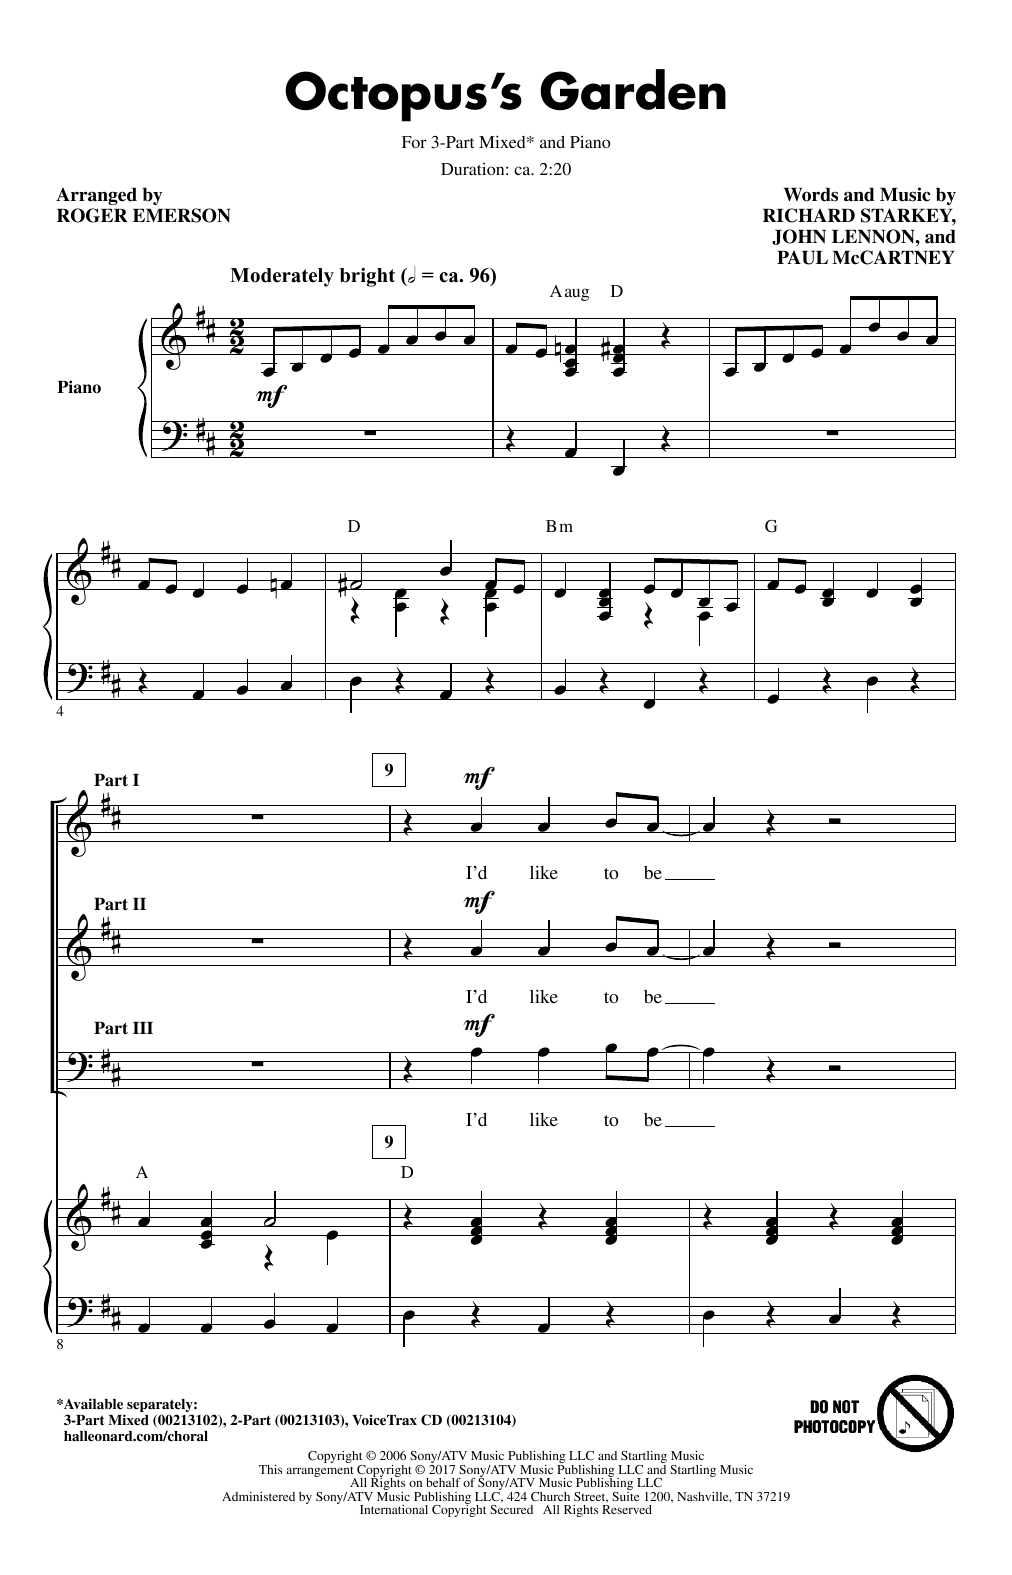 Roger Emerson Octopus's Garden sheet music notes and chords arranged for 3-Part Mixed Choir